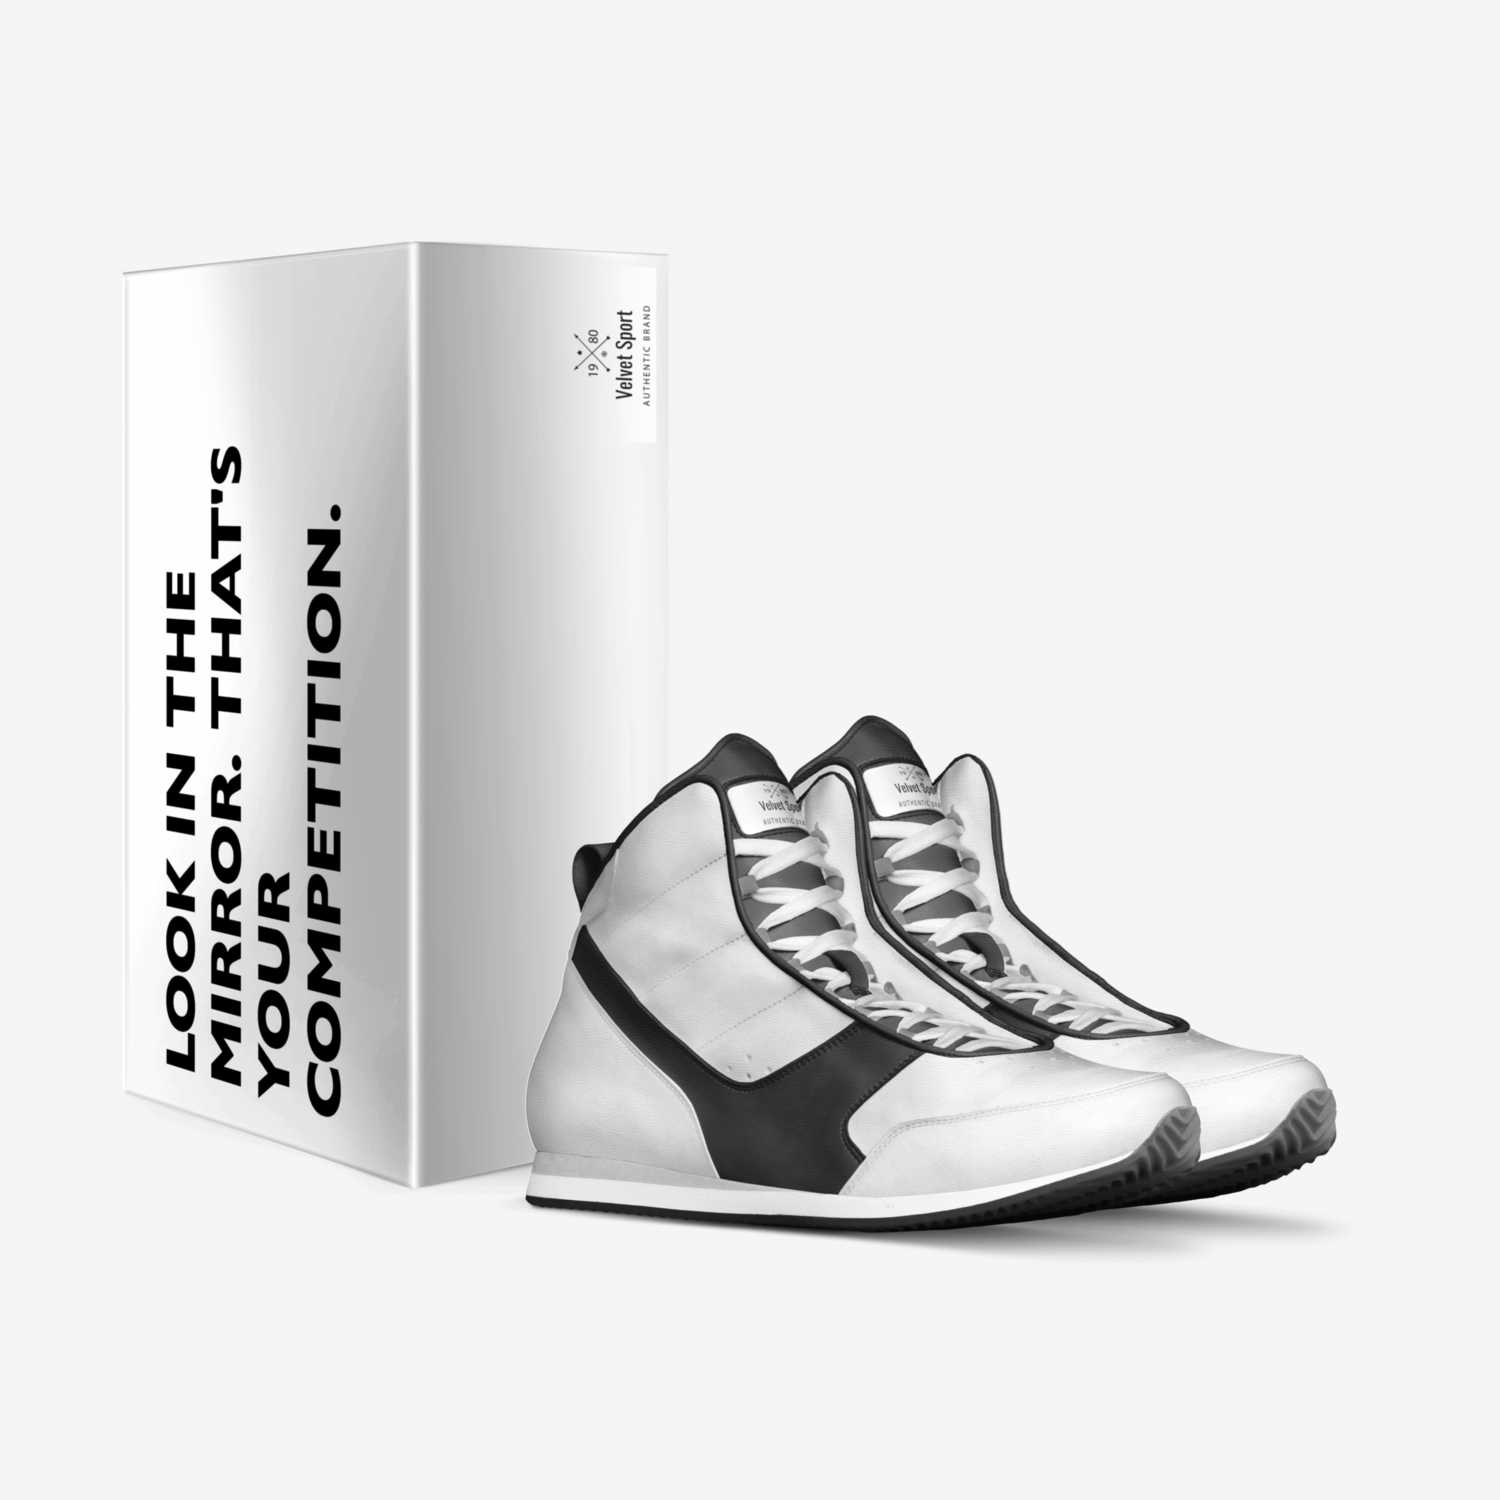 Velvet Sport custom made in Italy shoes by Shantae Esannason | Box view